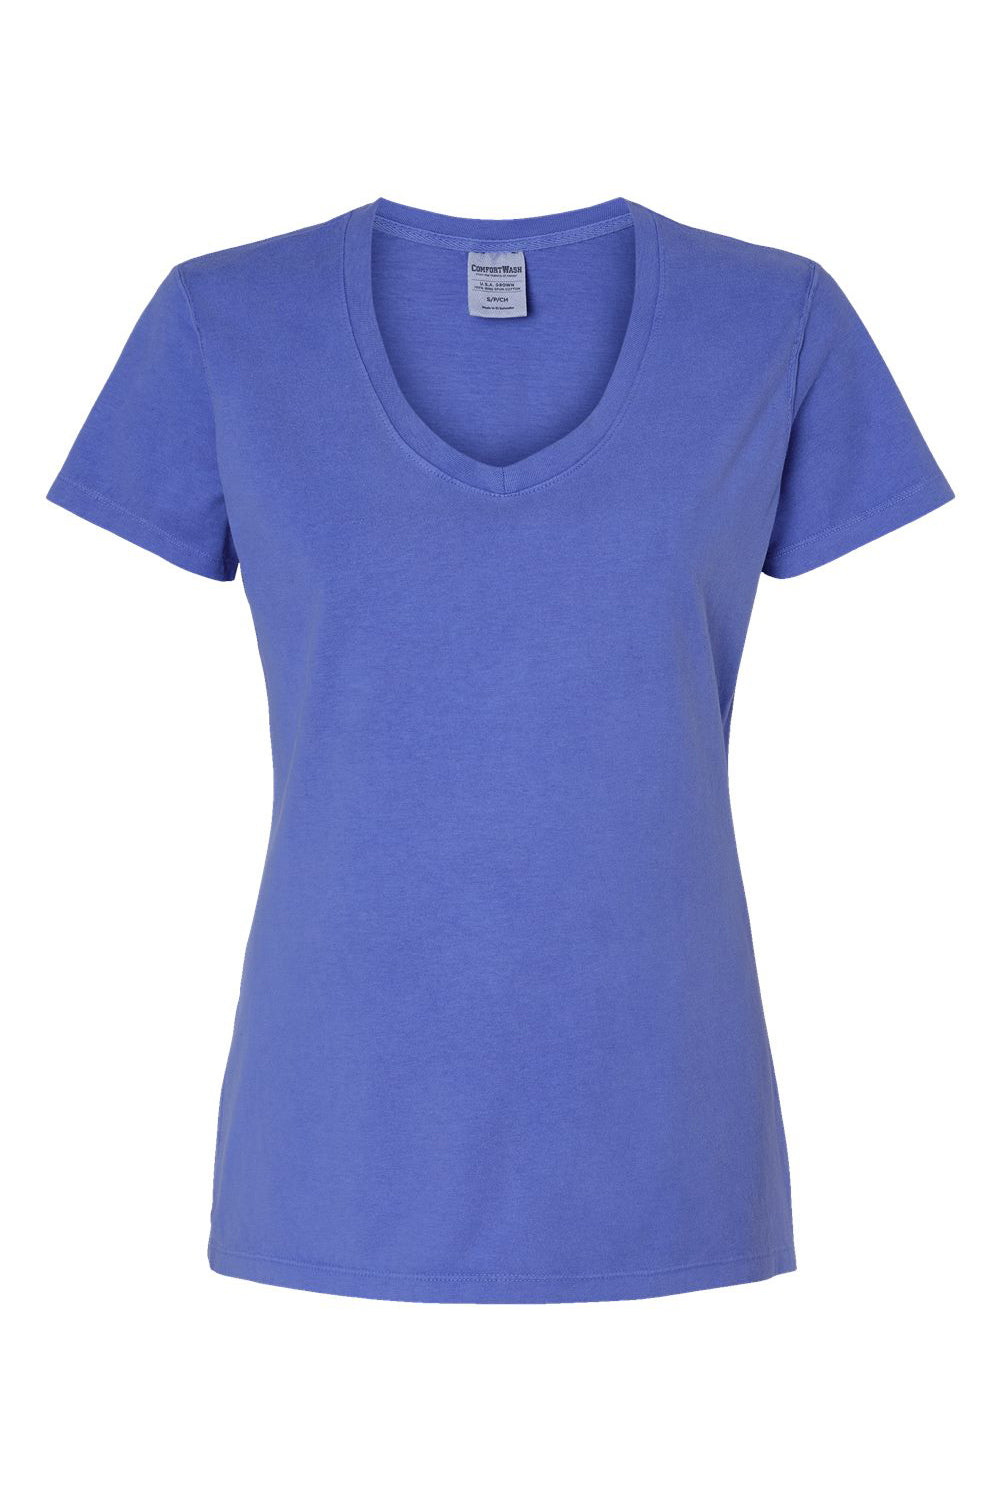 ComfortWash By Hanes GDH125 Mens Garment Dyed Short Sleeve V-Neck T-Shirt Deep Forte Blue Flat Front